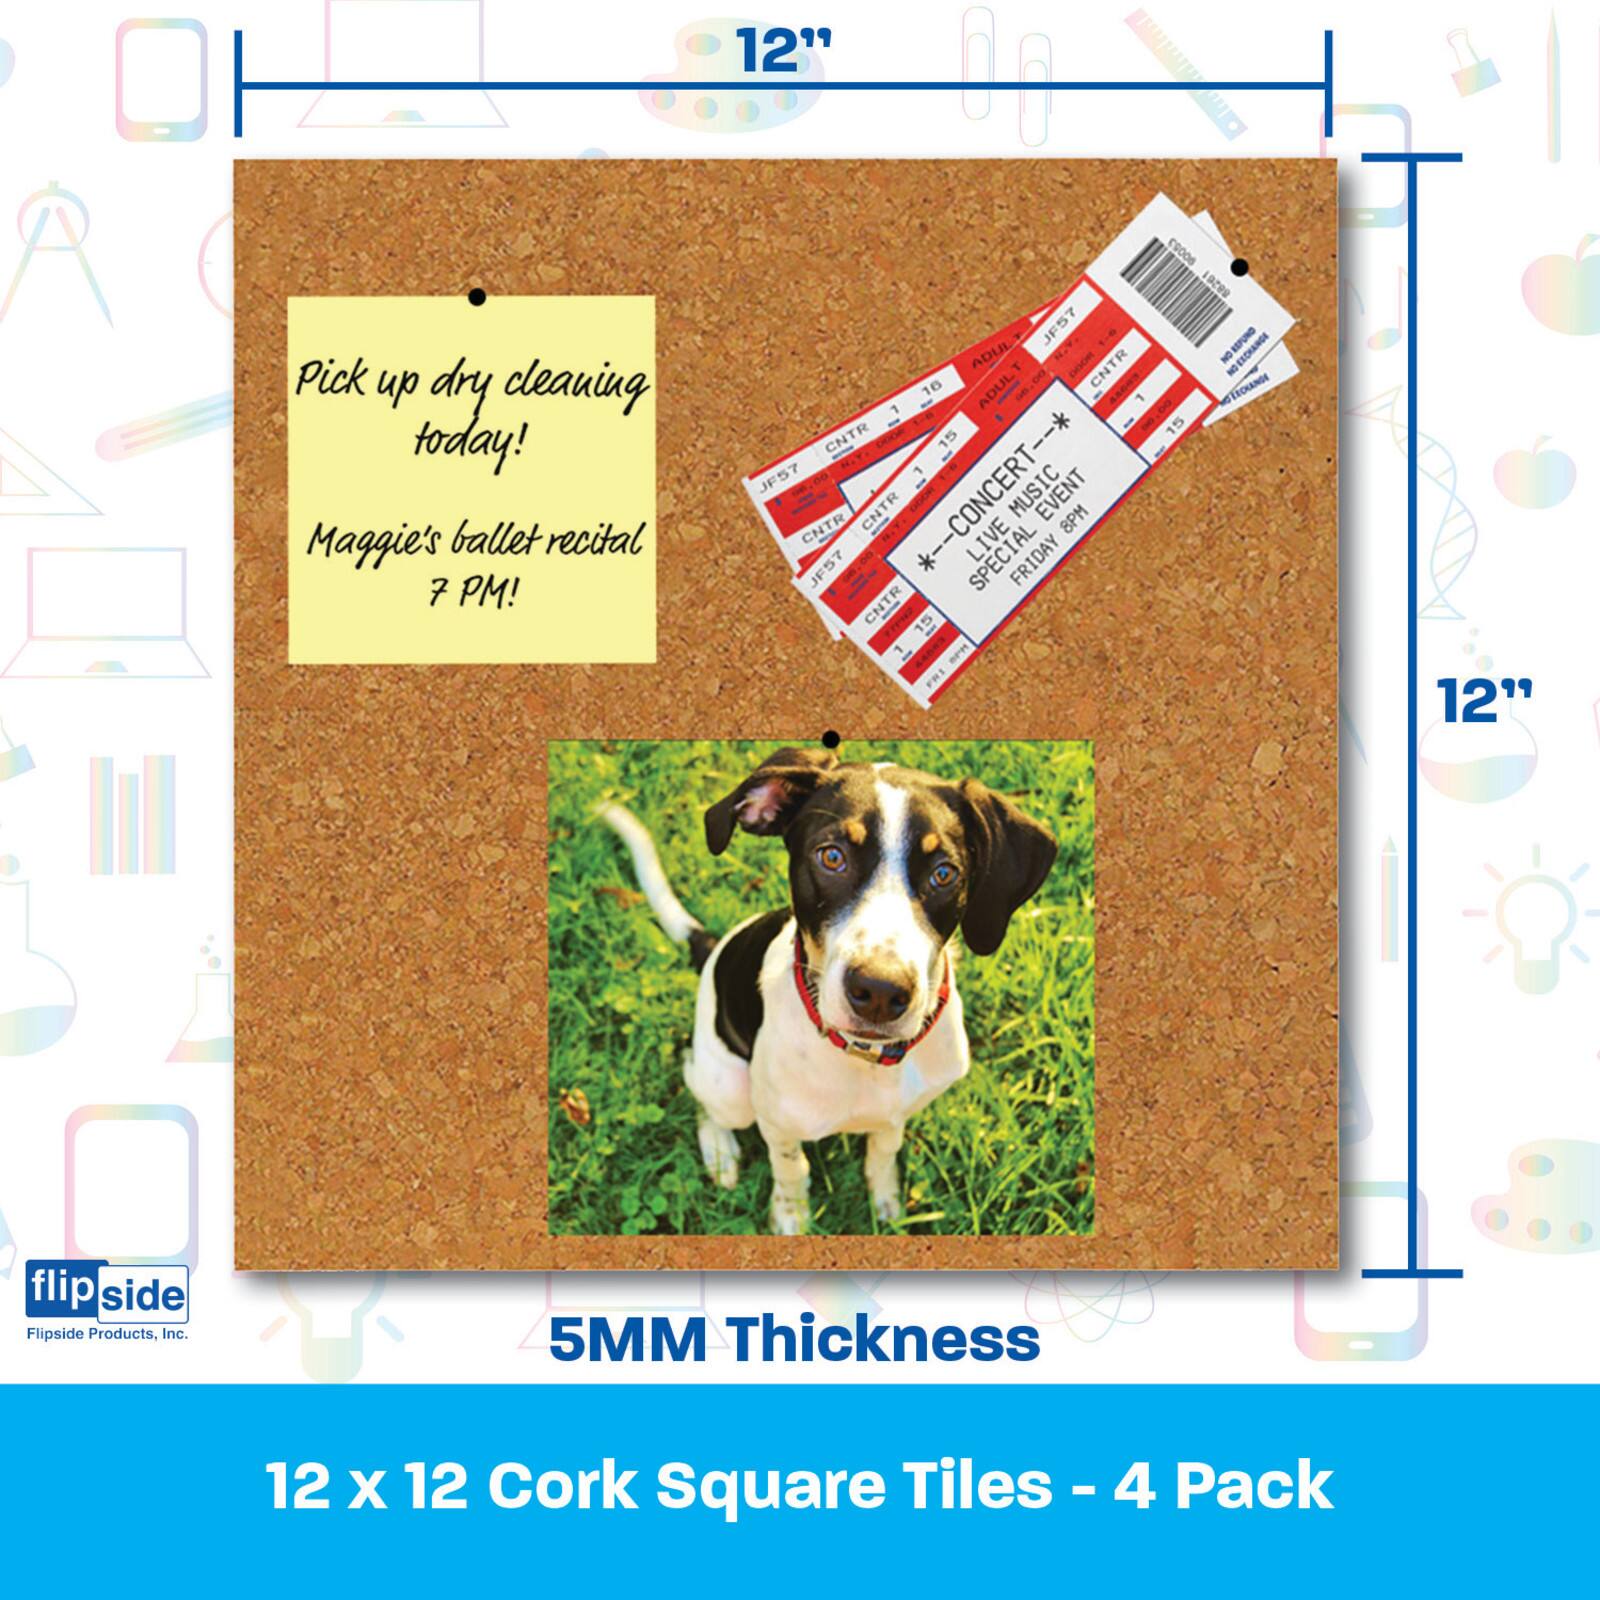 Pack of 4 12" x 12" Flipside Dark Cork Tiles 